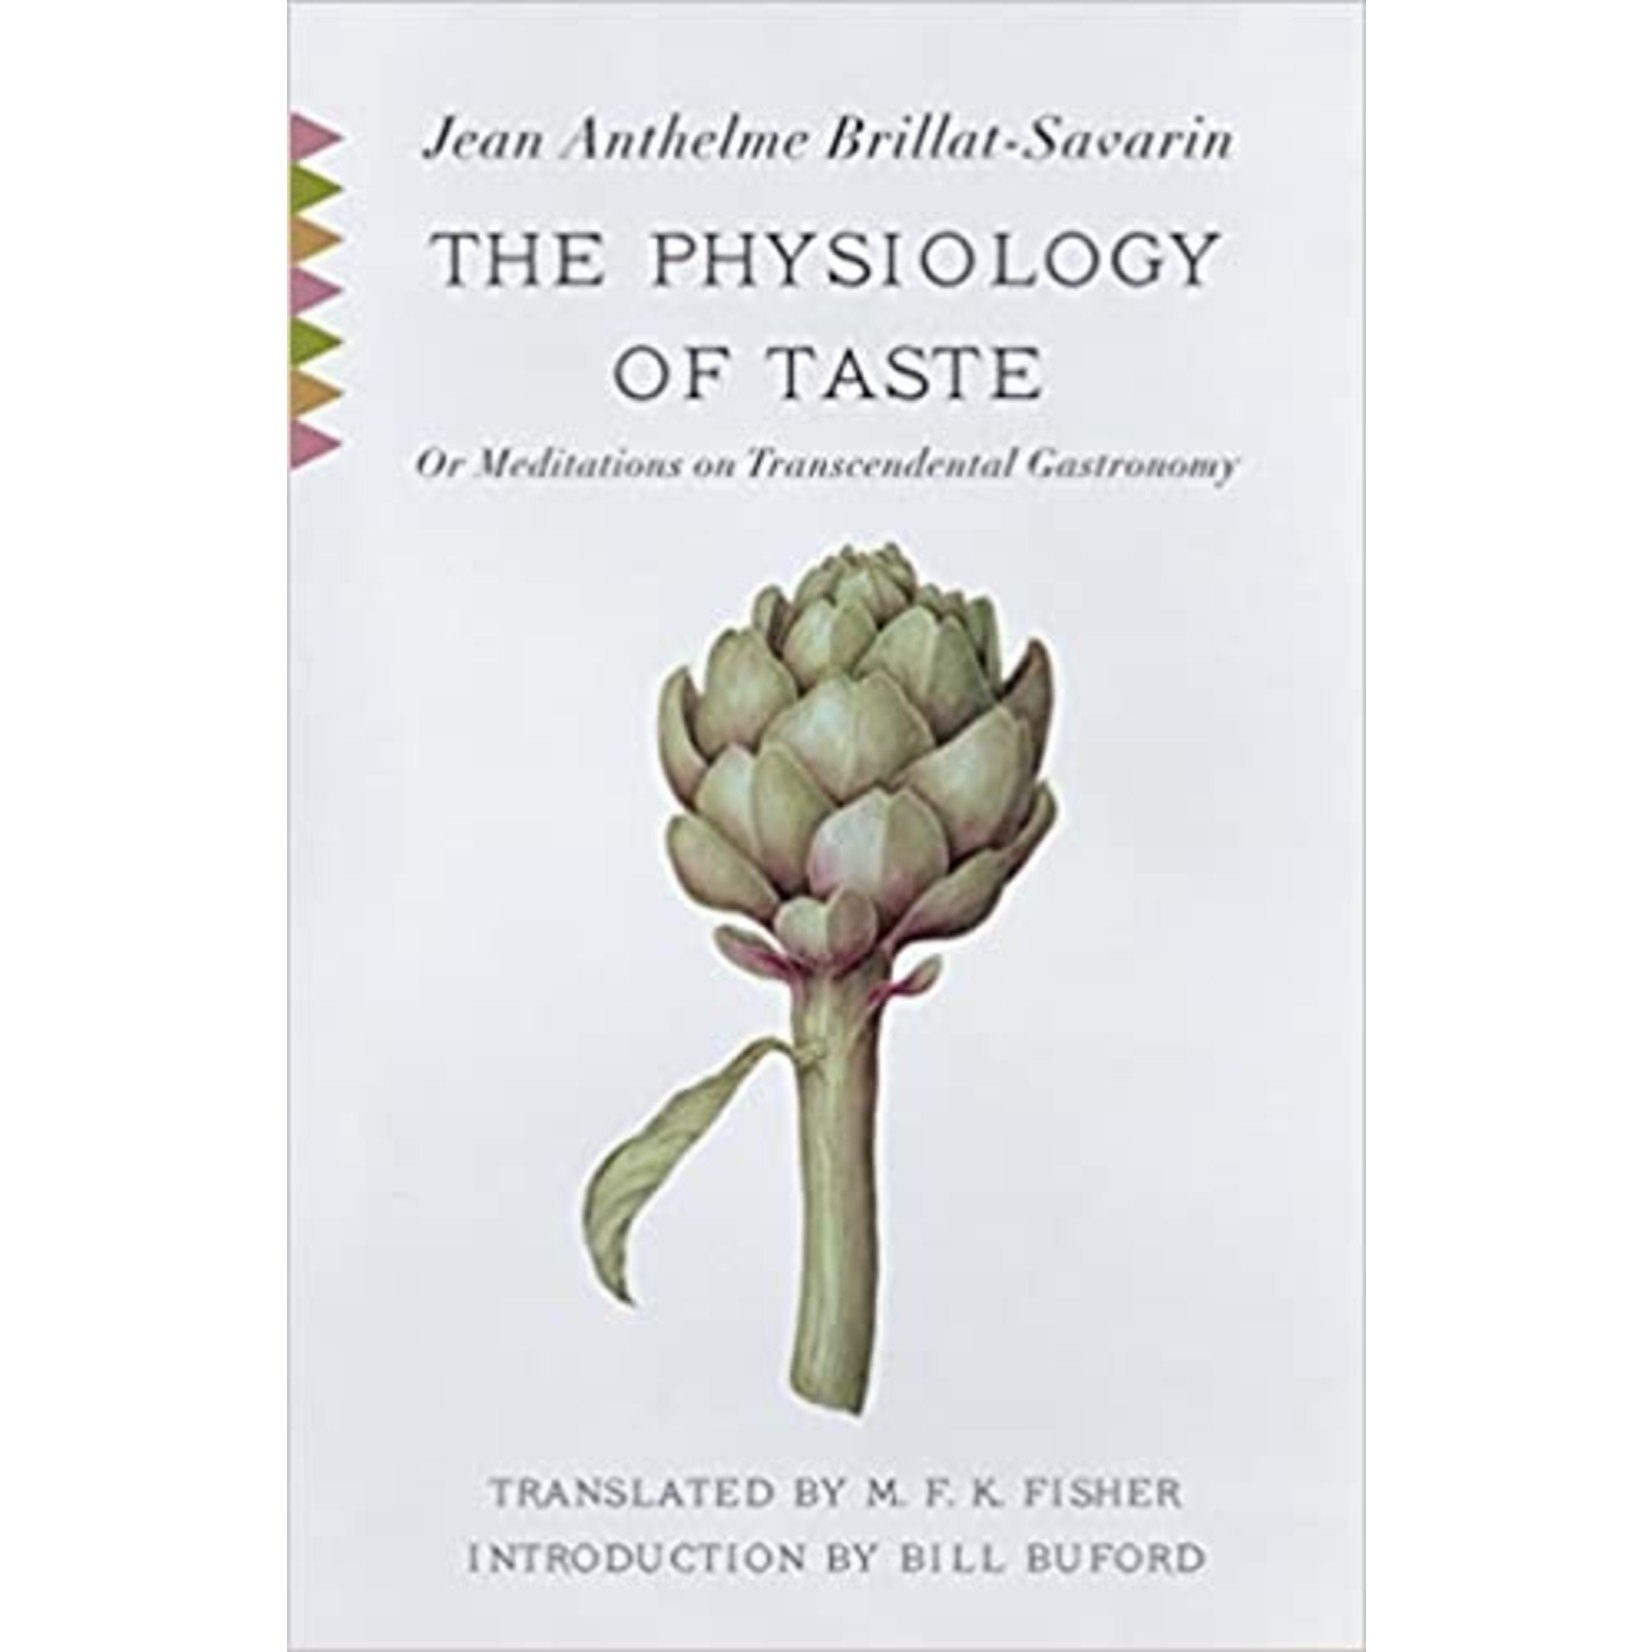 Vintage Physiology Of Taste Brillat-Savarin